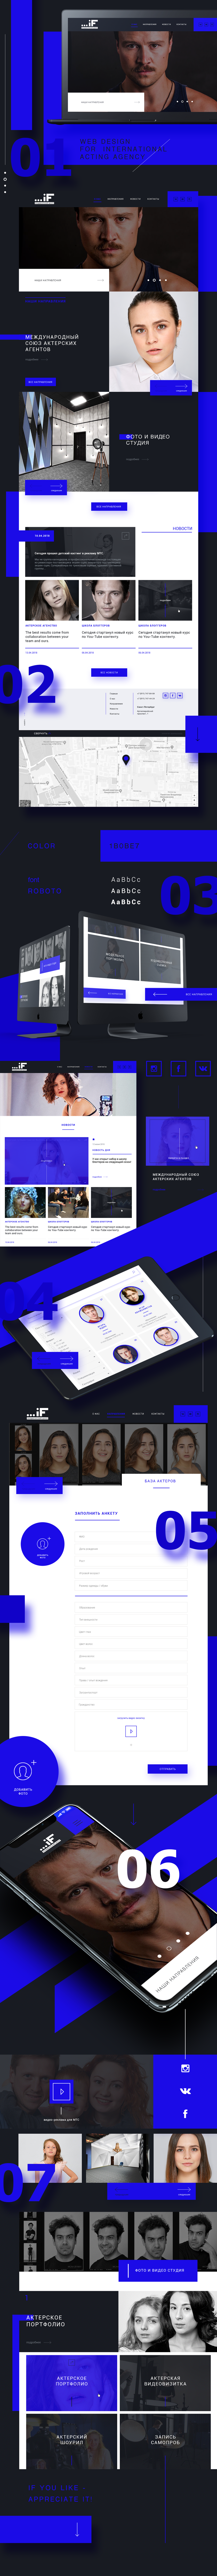 acting actors Web Design  UI/UX UX design blue design blue Minimalism concept bright